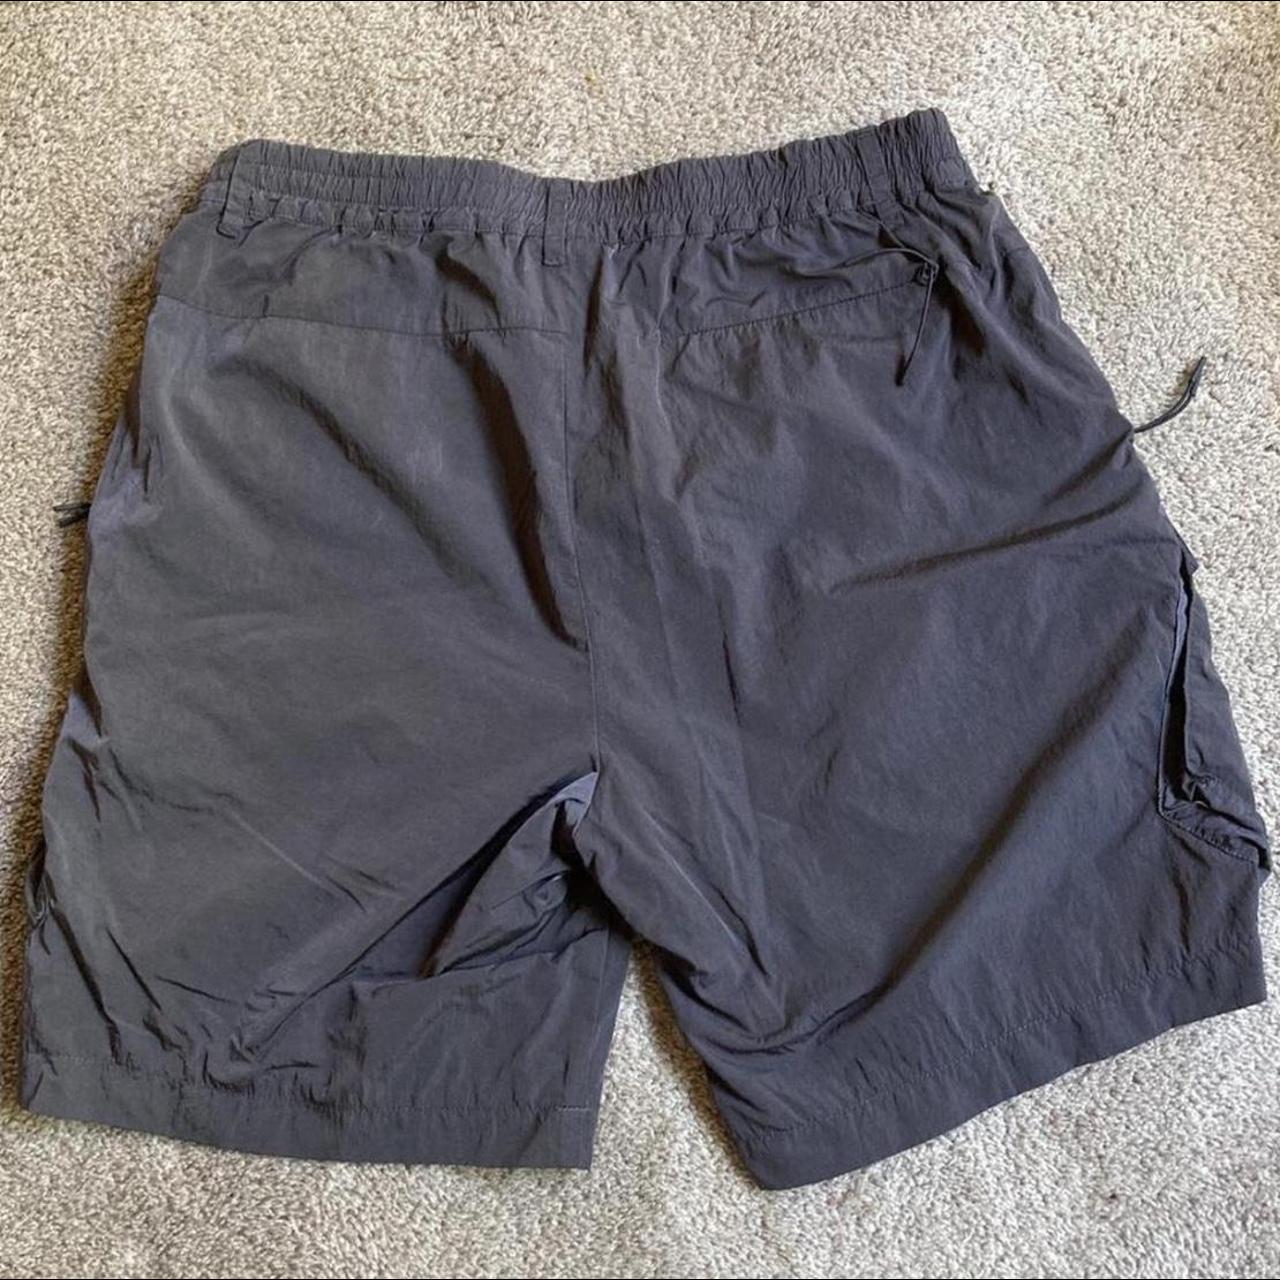 Kith Men's Black Shorts | Depop